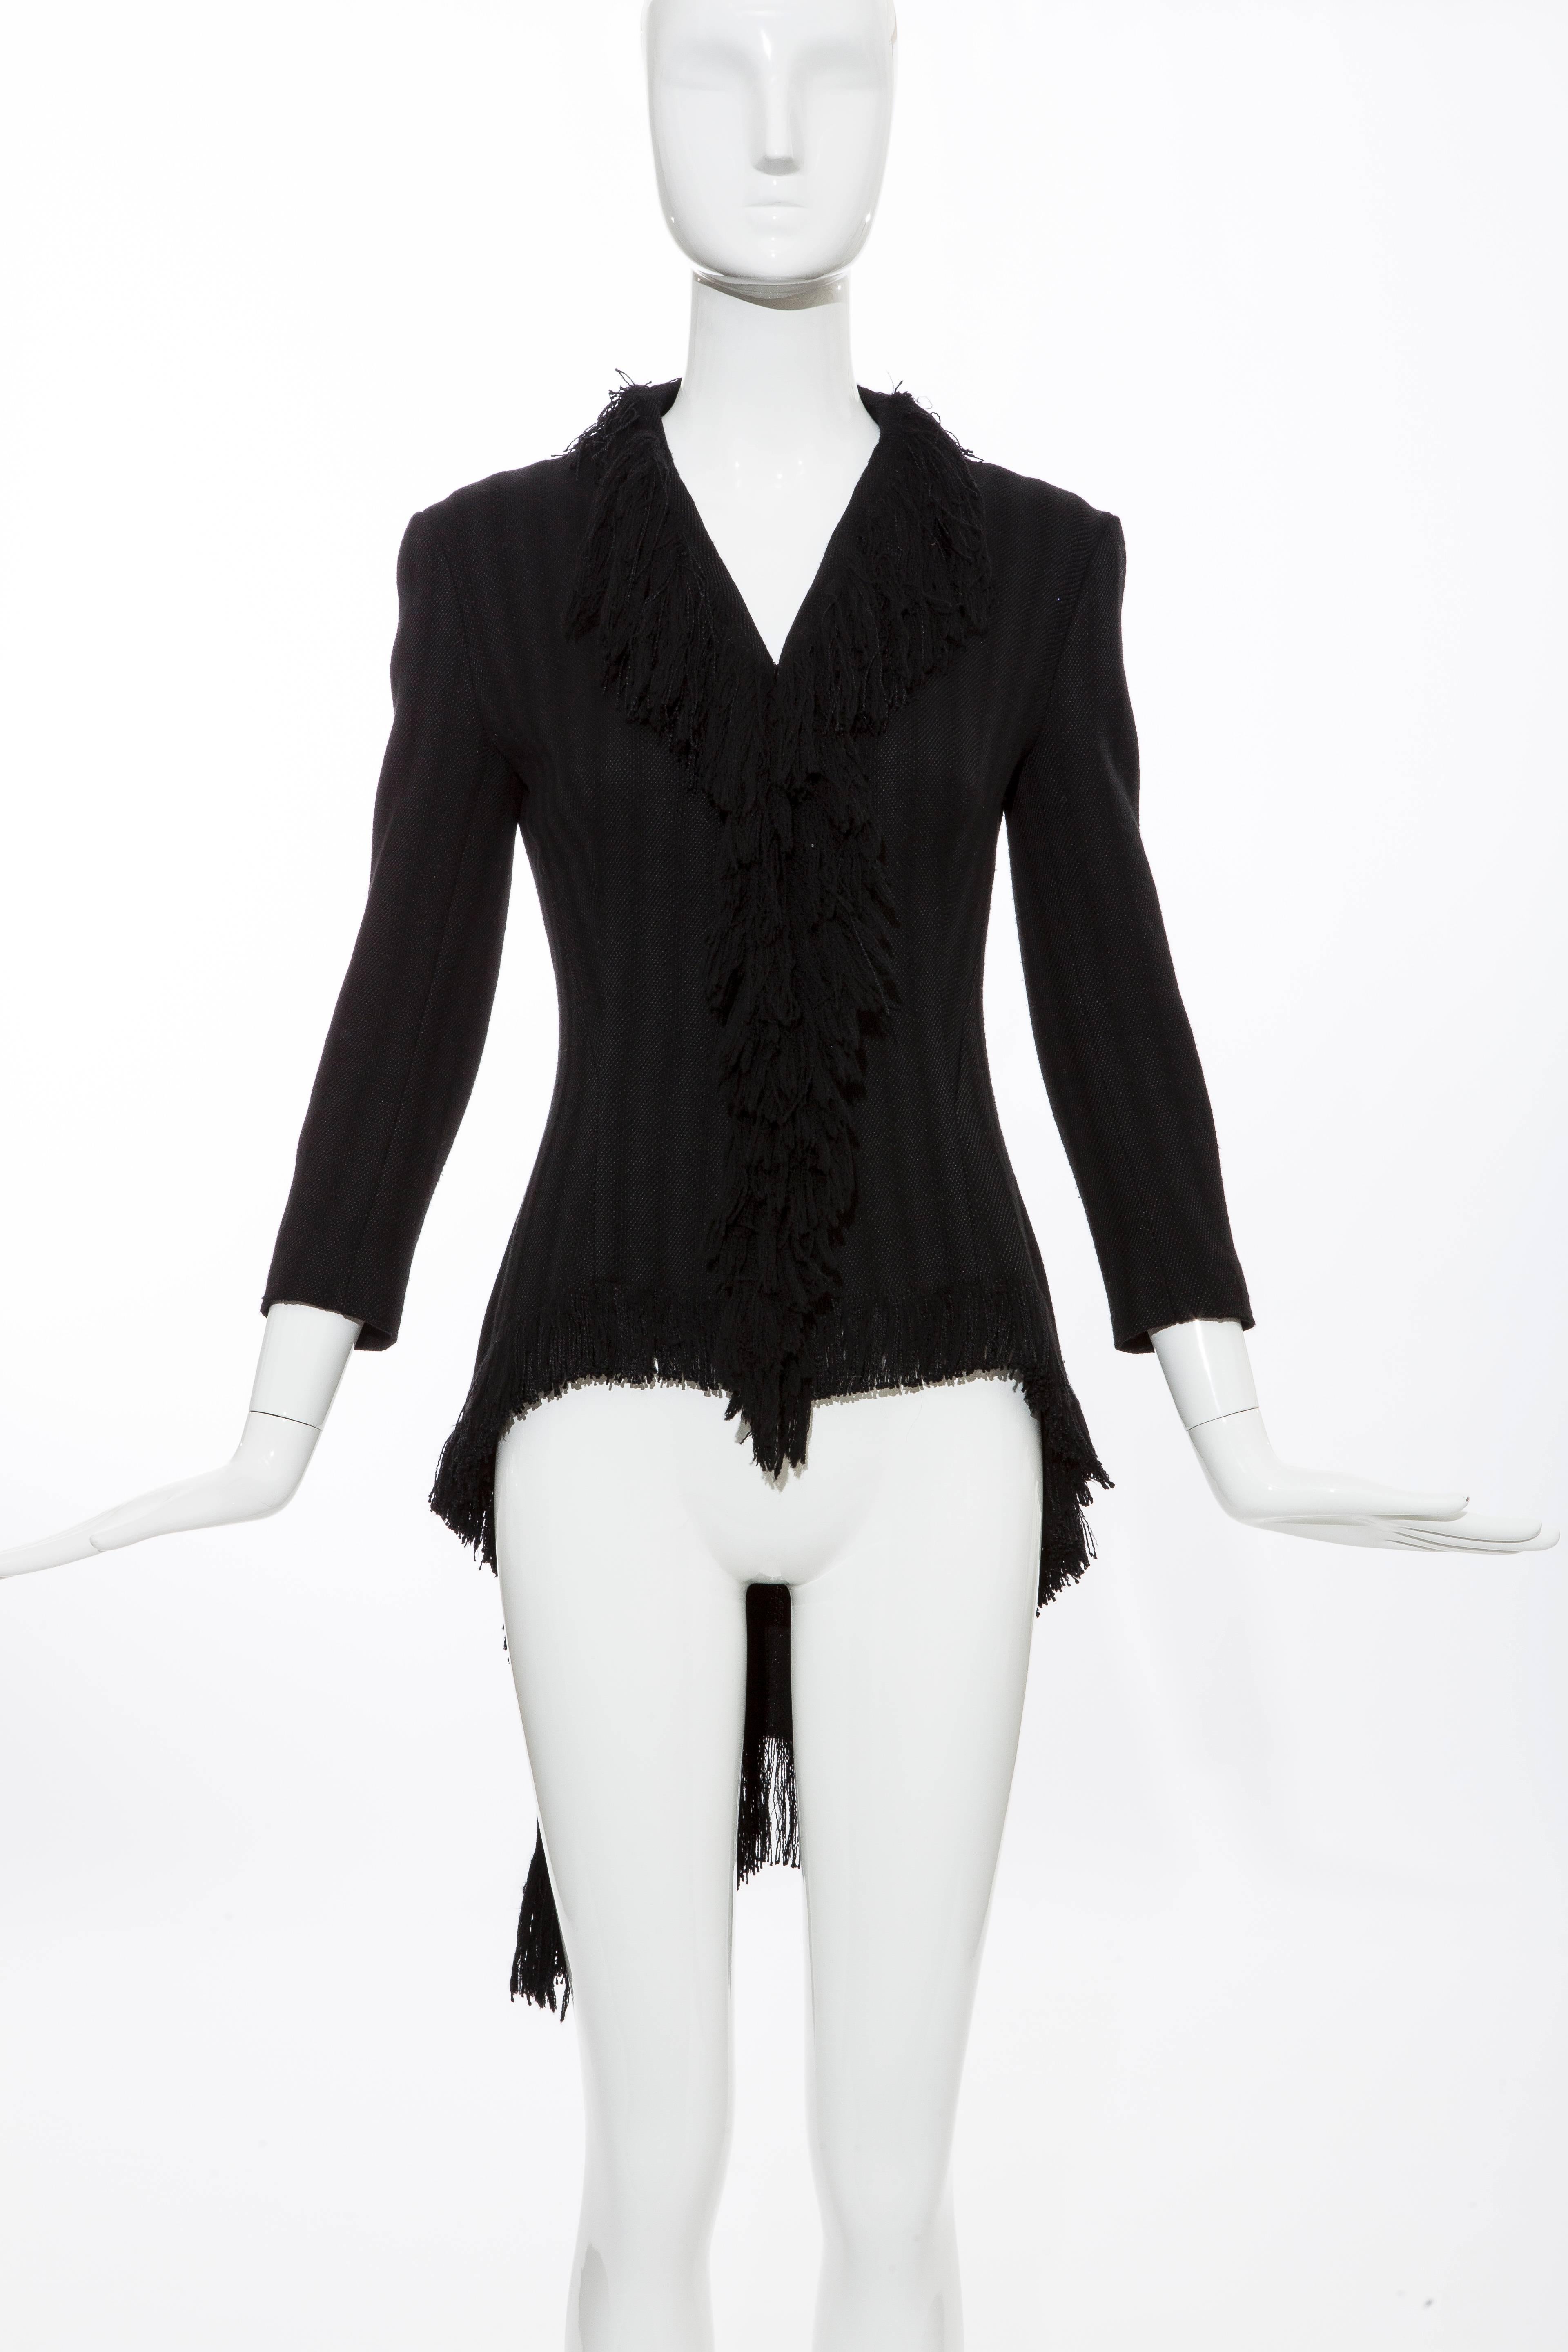 Yohji Yamamoto Black Silk Wool Tweed Cutaway Jacket With Fringe Trim, Fall 2013 In Excellent Condition For Sale In Cincinnati, OH